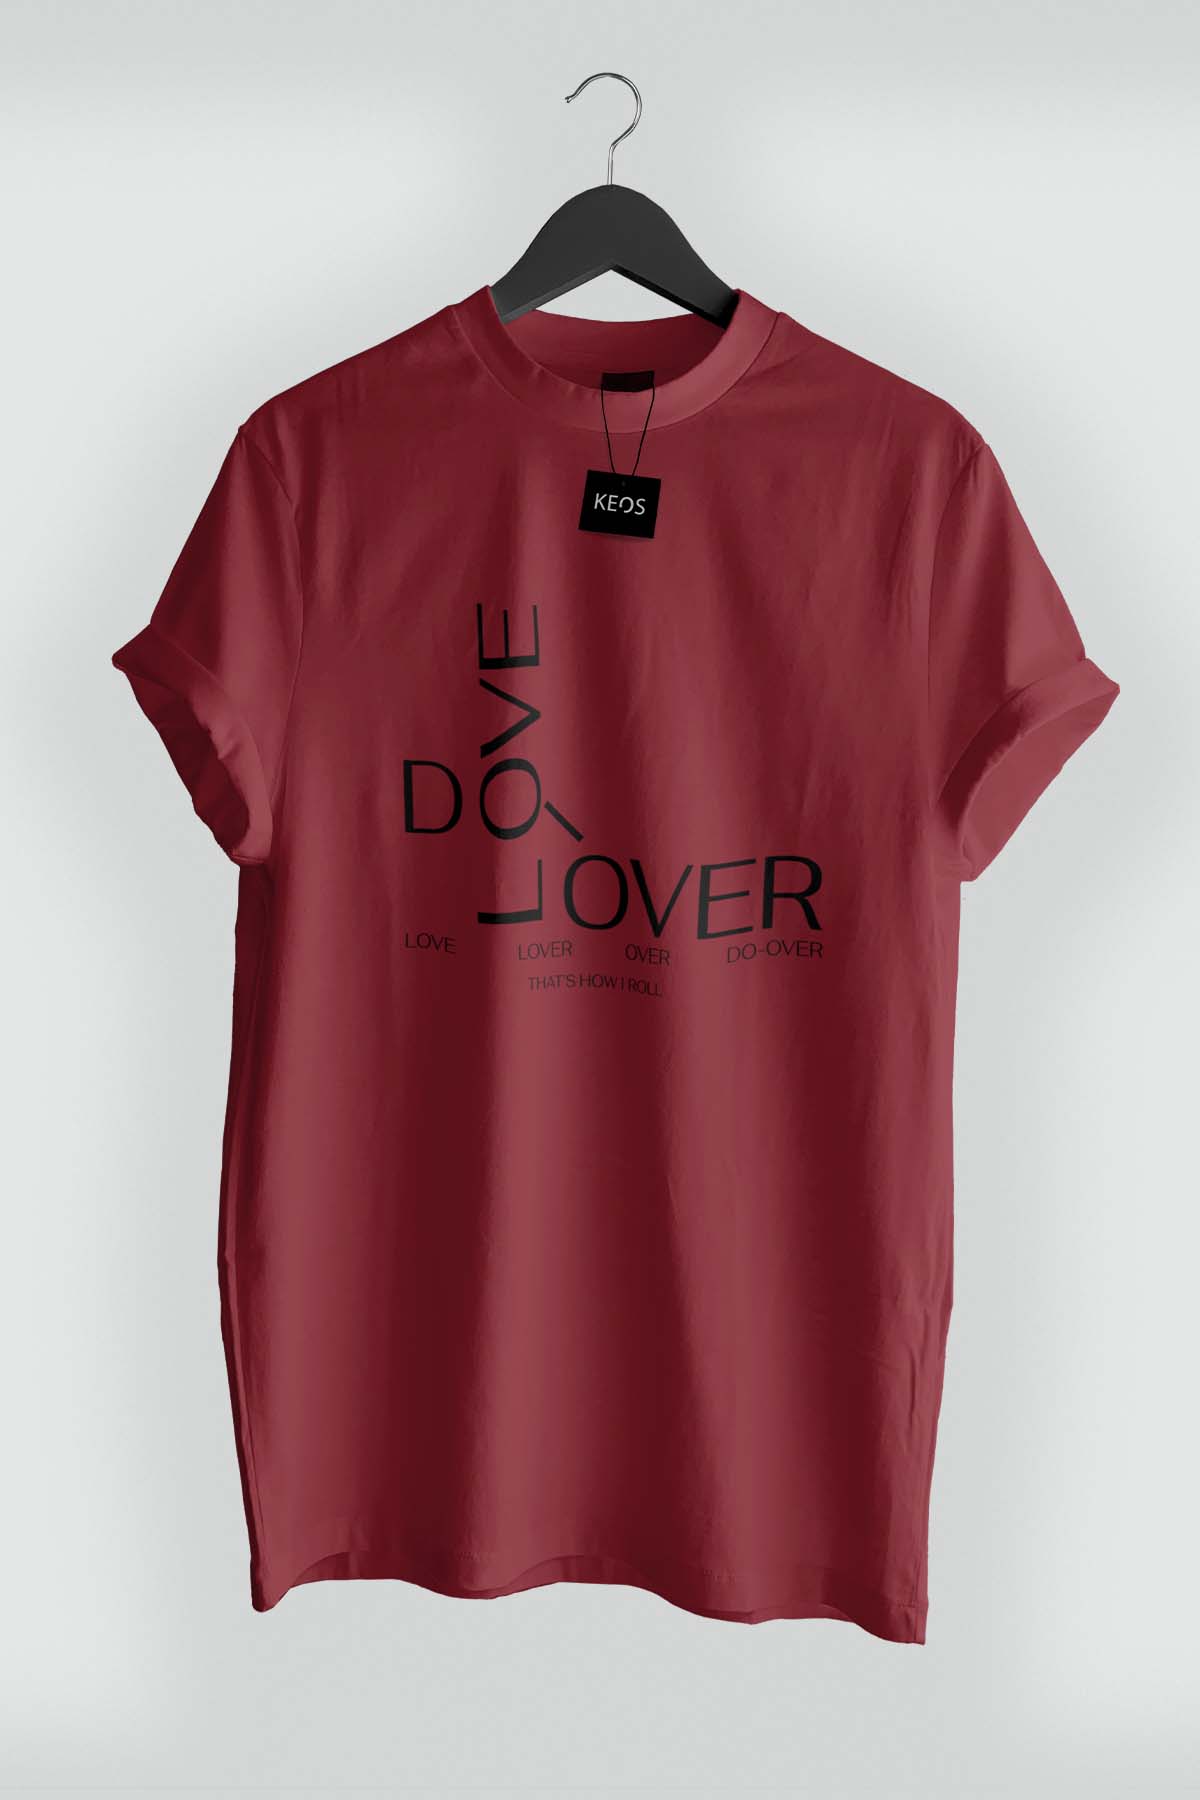 Lover Organic Cotton T-shirt - keos.life